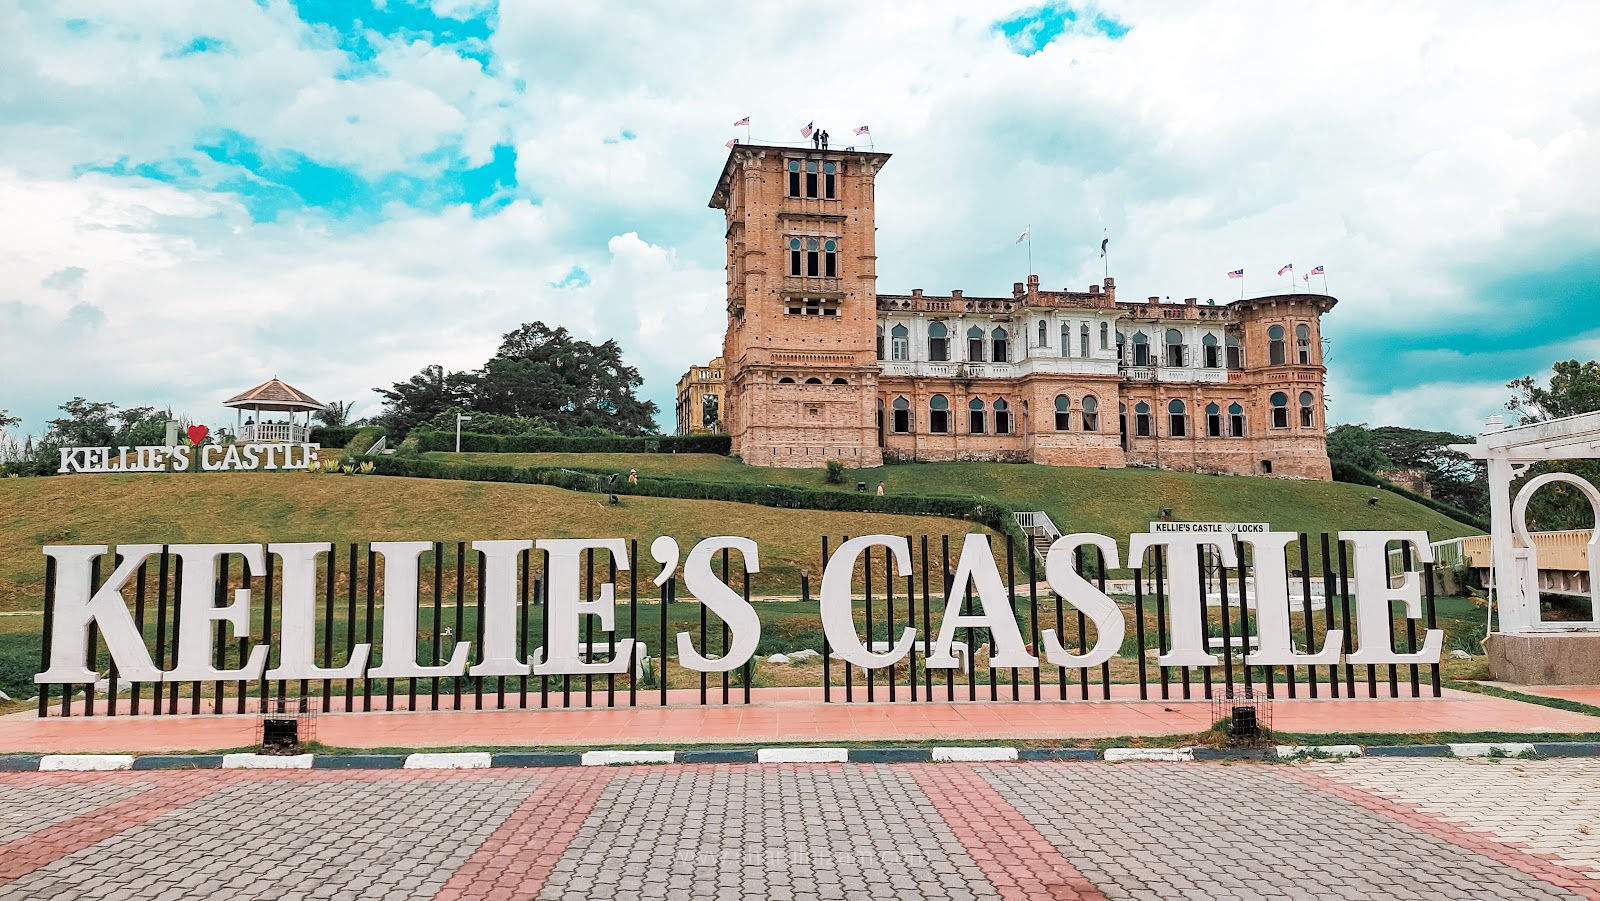 Kellie's Castle, Batu Gajah, Perak